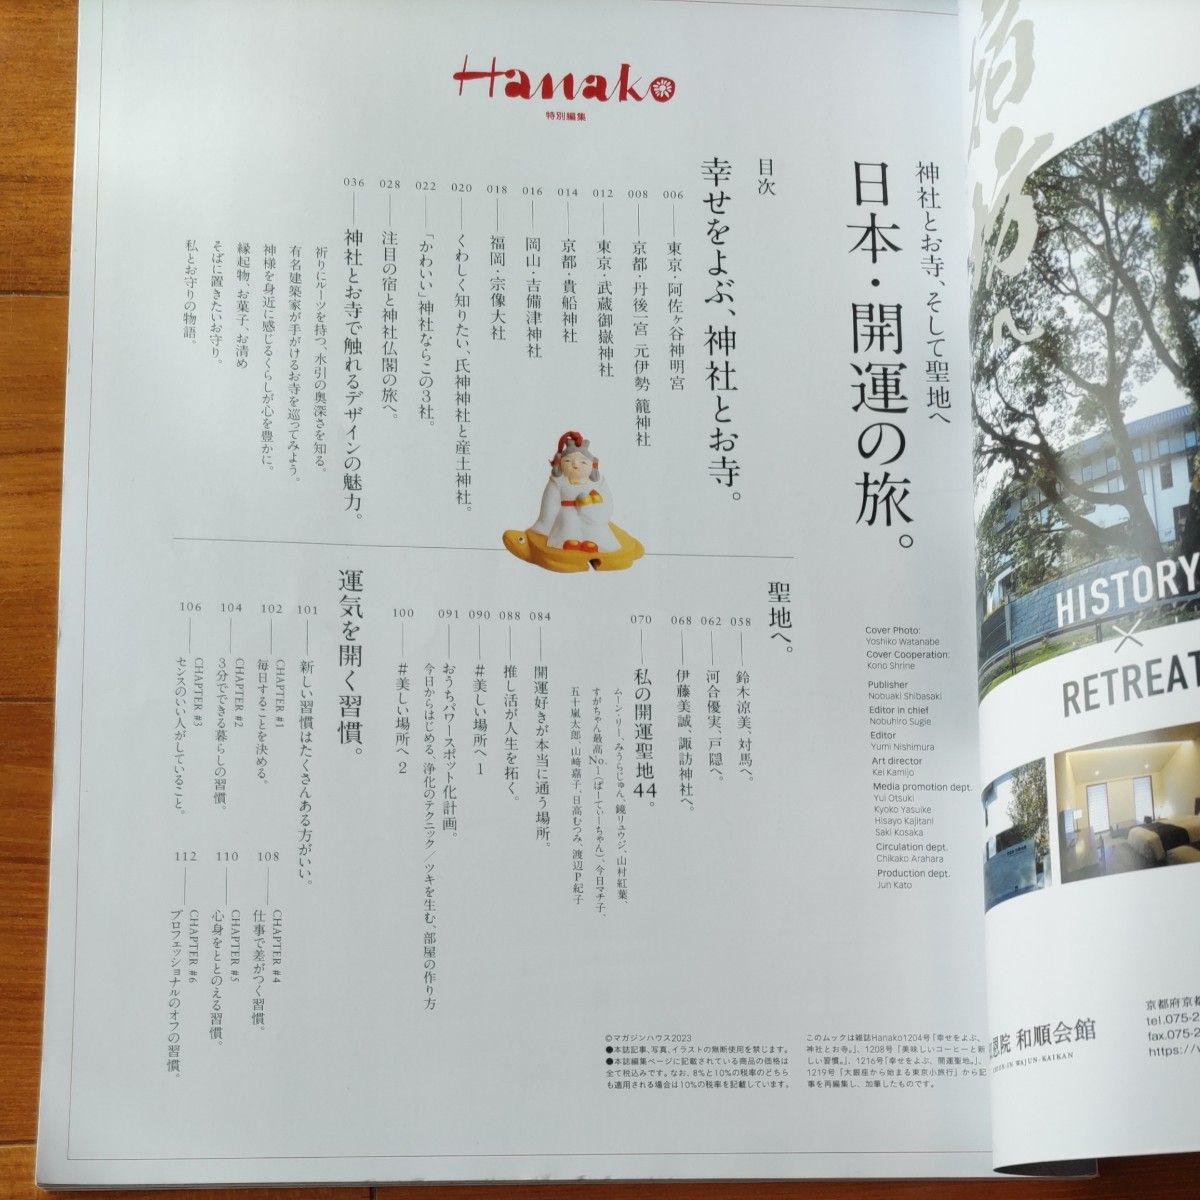 Hanako 特別編集　日本開運の旅。 神社とお寺、そして聖地へ/旅行